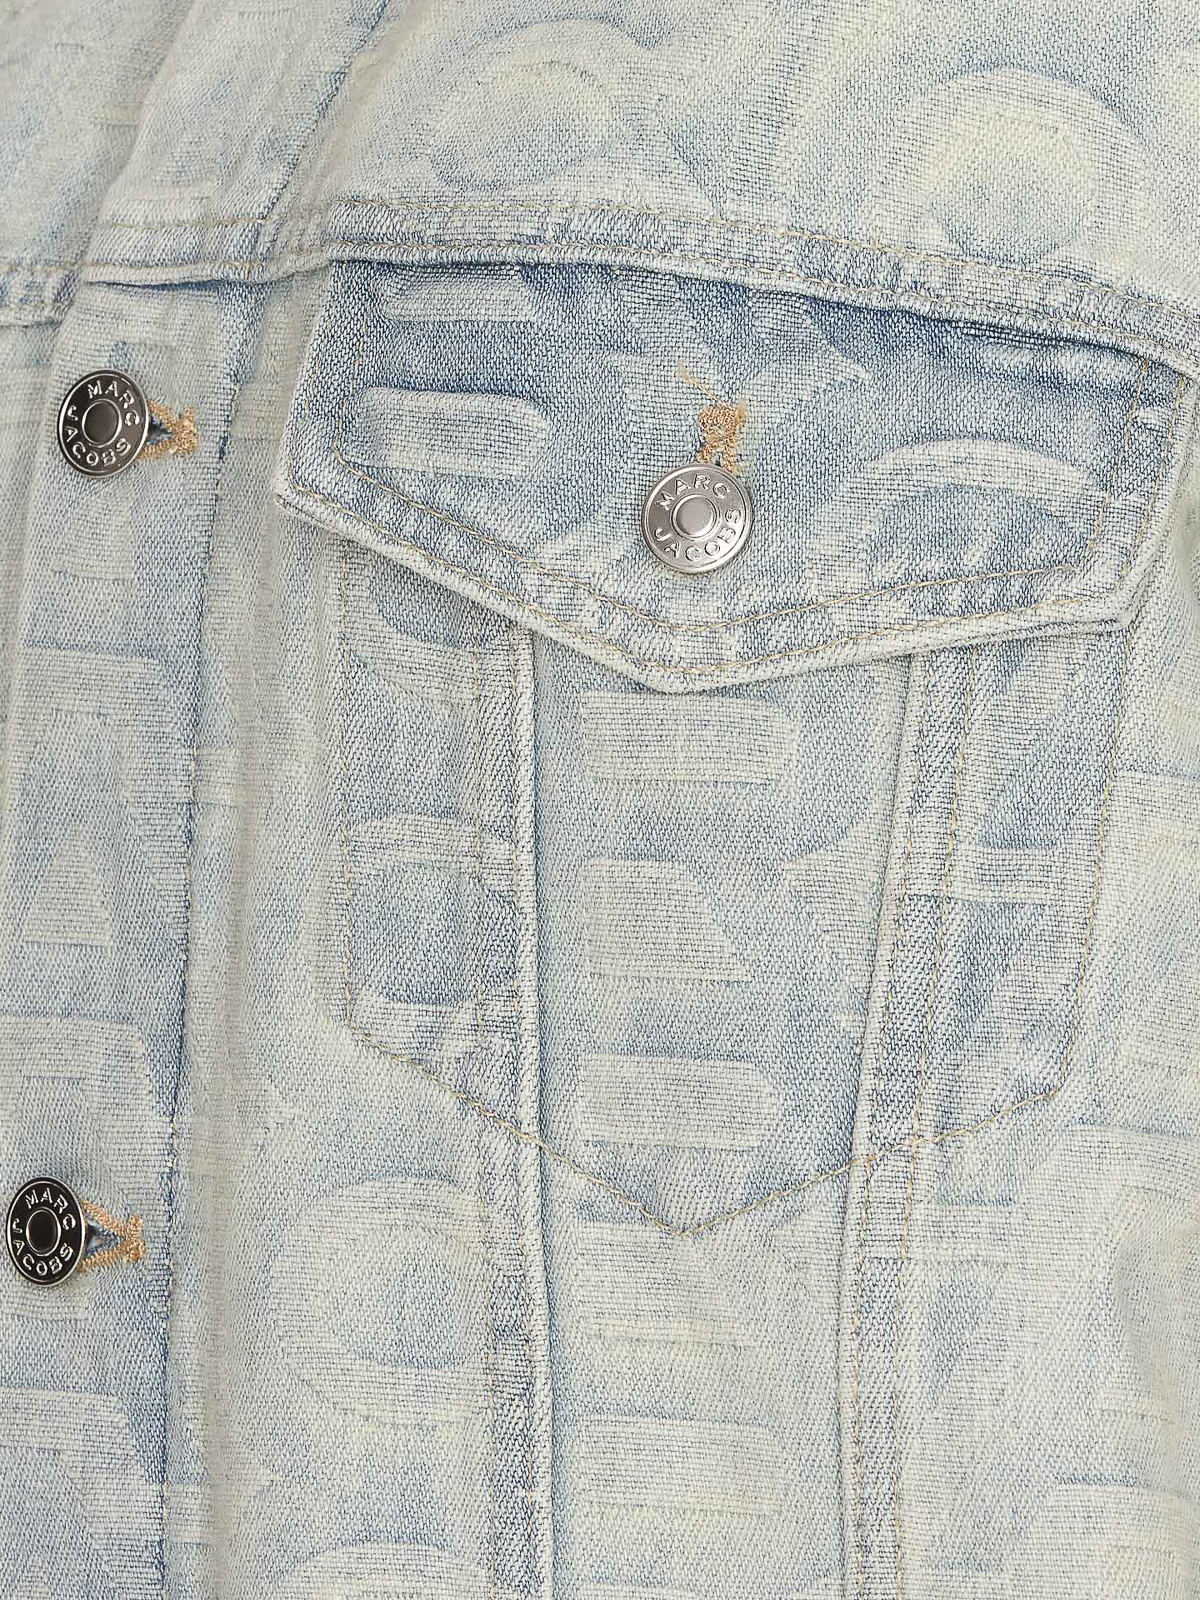 Marc Jacobs 'The Monogram Denim Jacket' - S